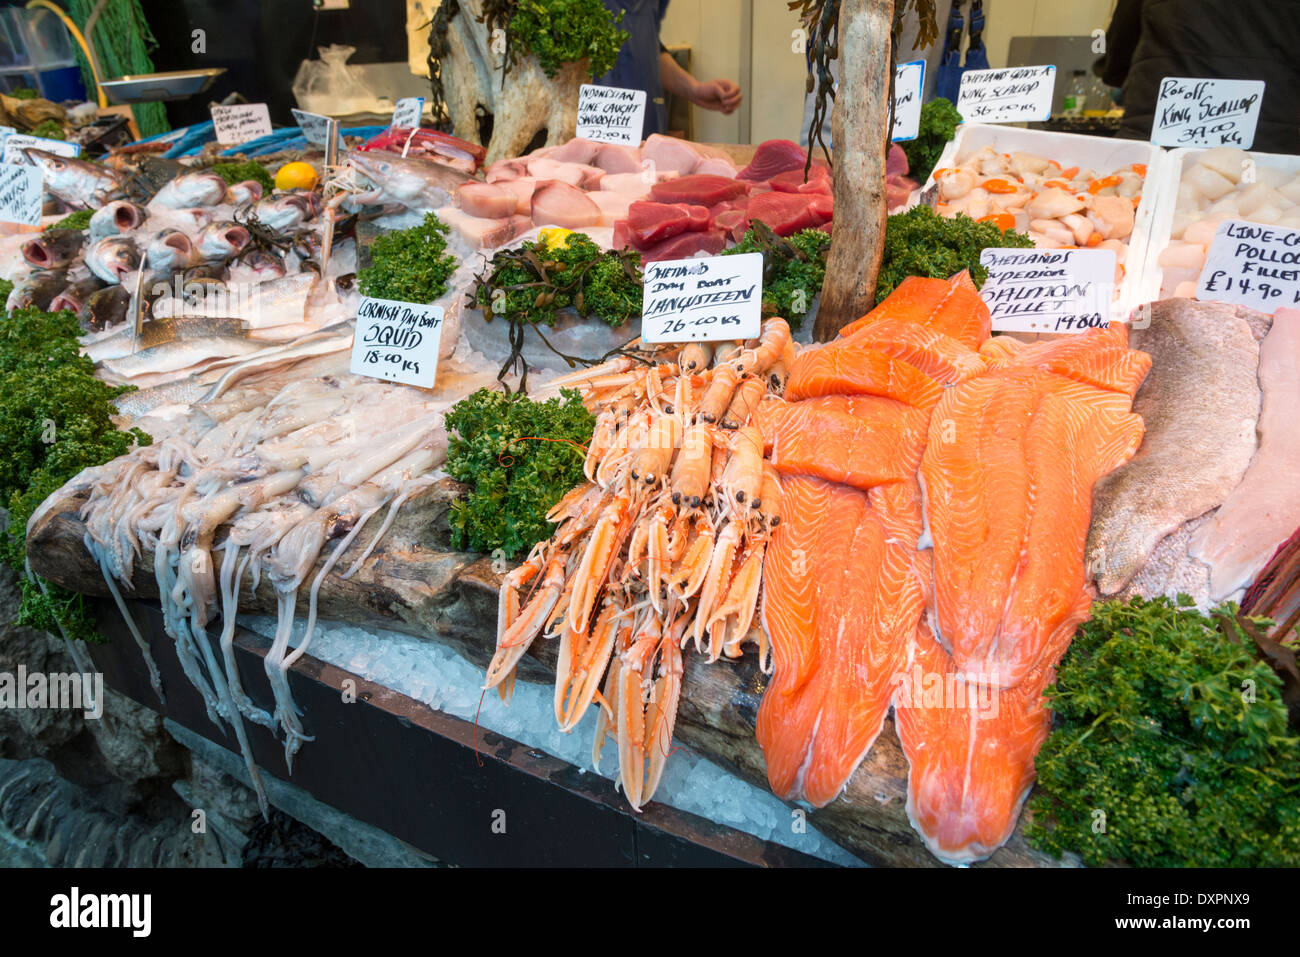 Fishmonger stall in Borough Market, London, England, UK Stock Photo